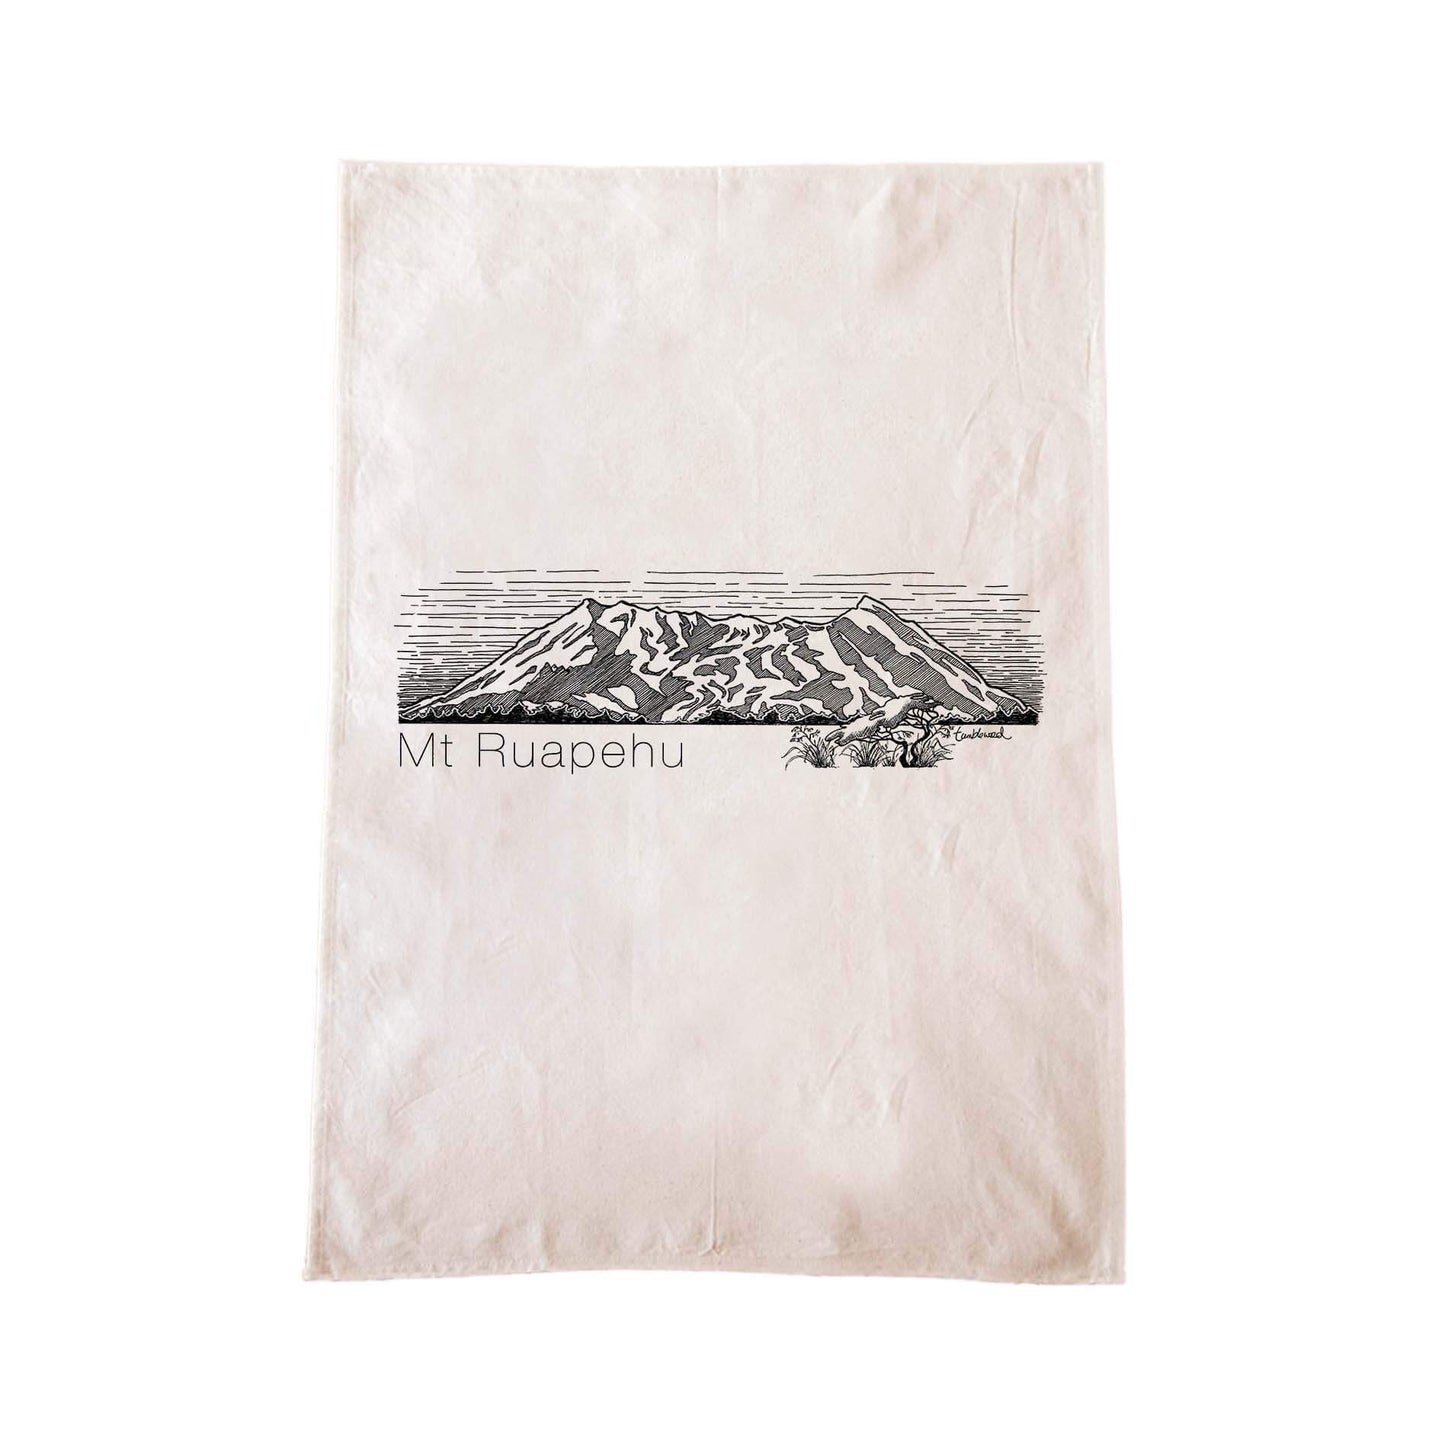 Off-white cotton tea towel with a screen printed Mt Ruapehu design.